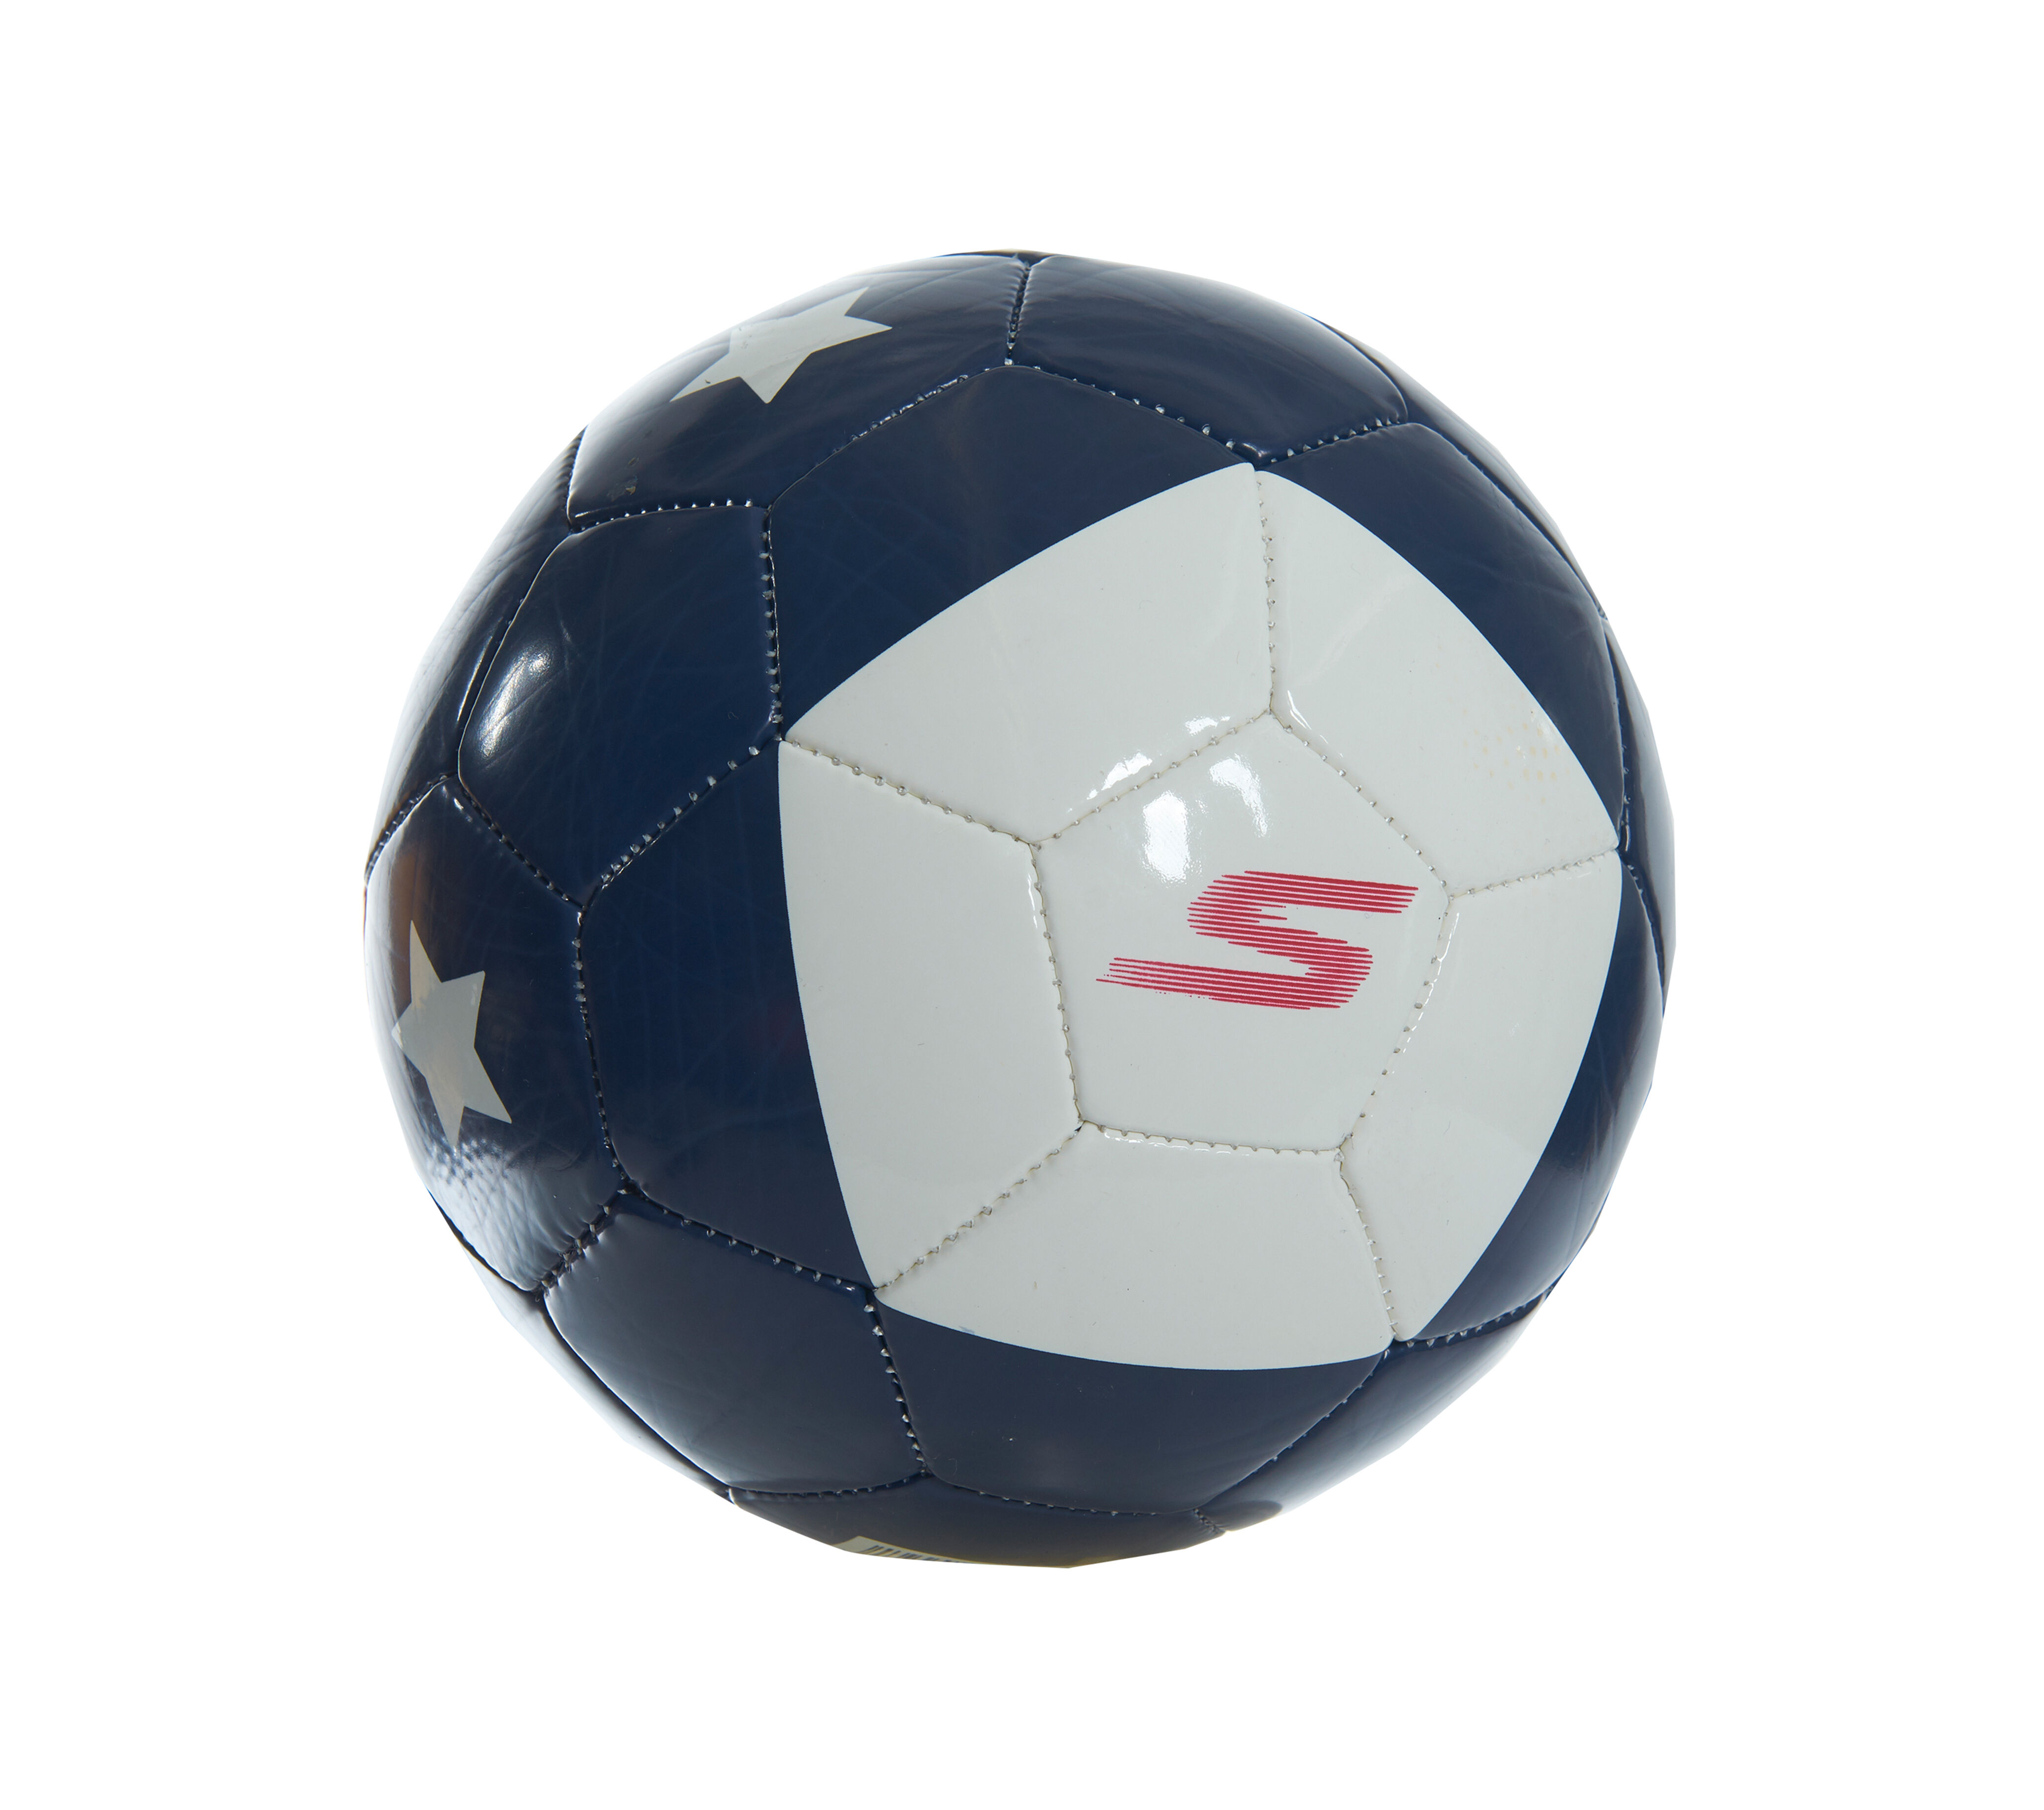 USA Size 5 Soccer Ball